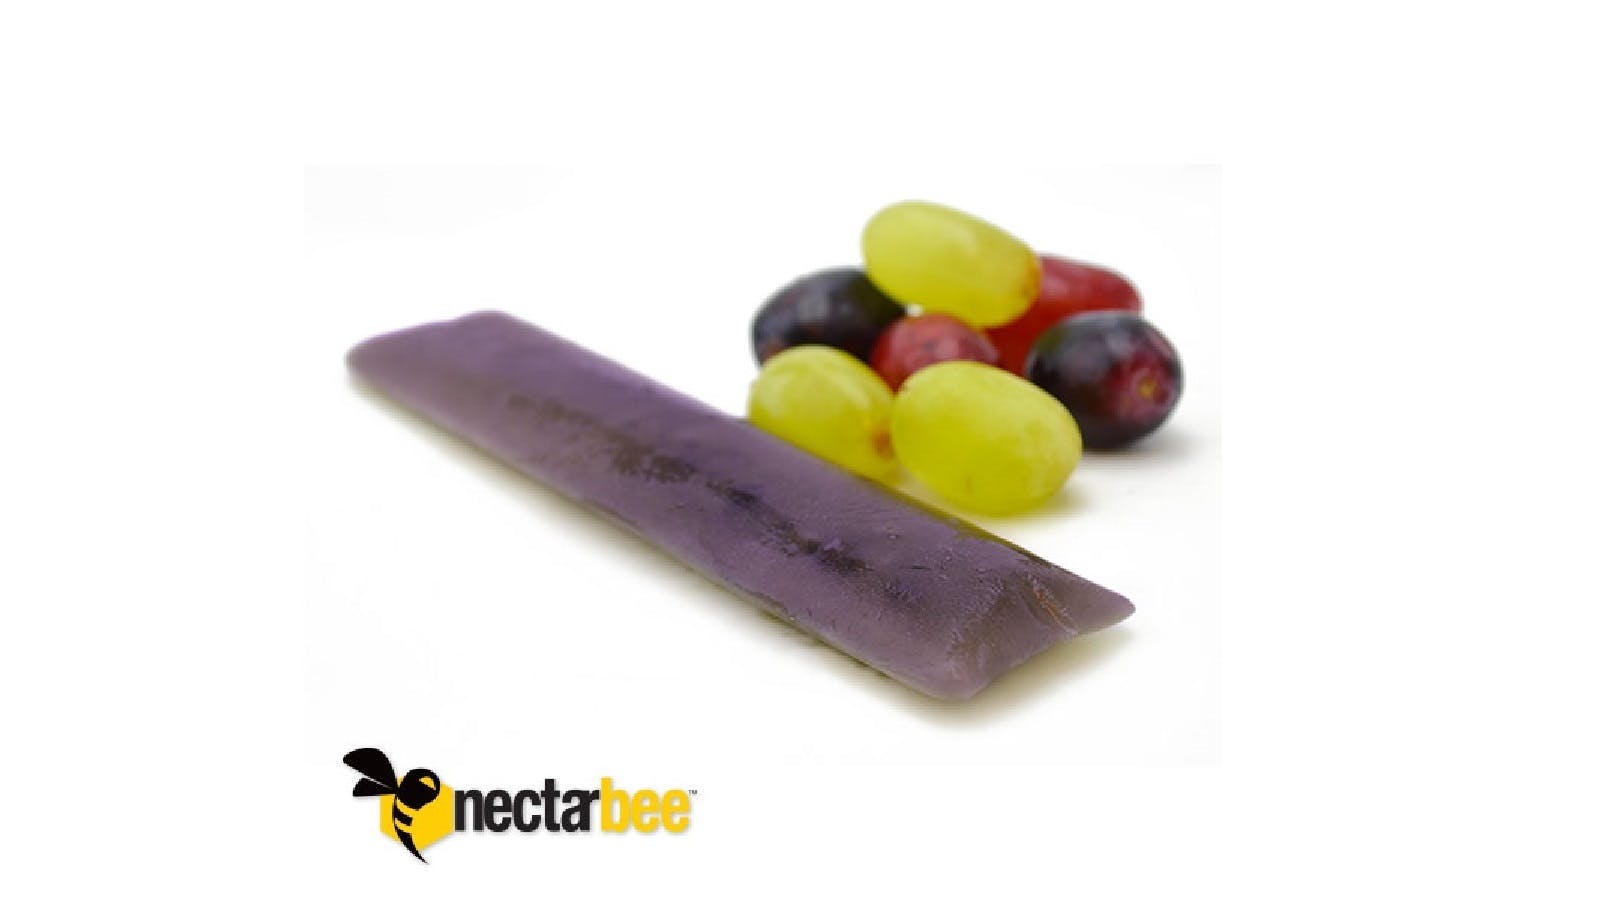 edible-nectarbee-grape-icicle-10mg